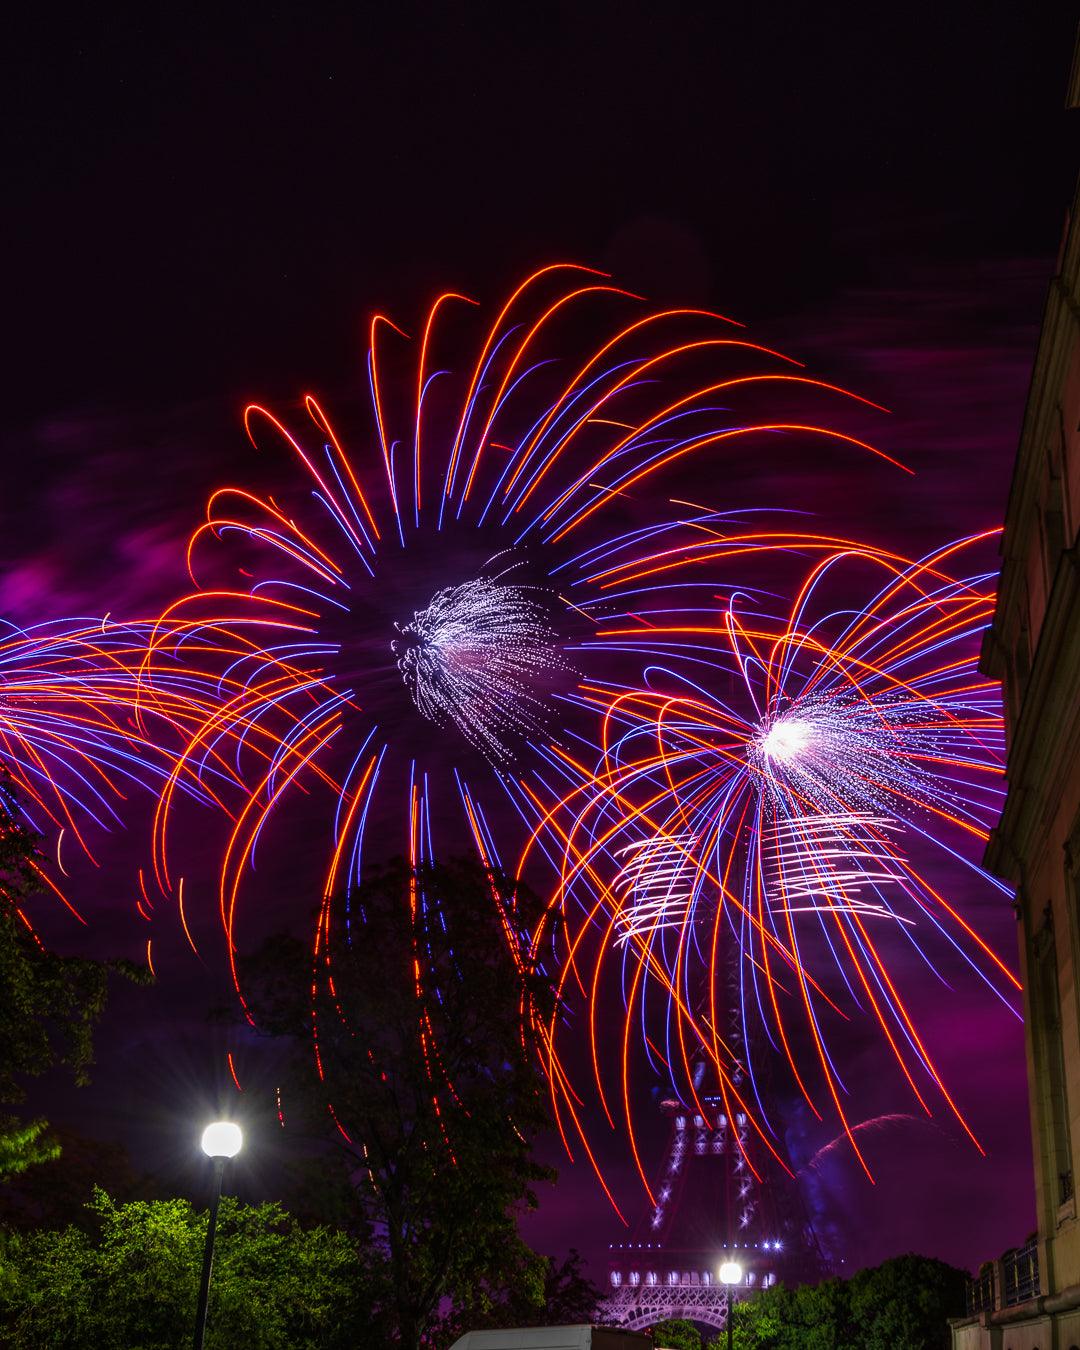 Fireworks of July 14, 2022 - ParisBoatClub